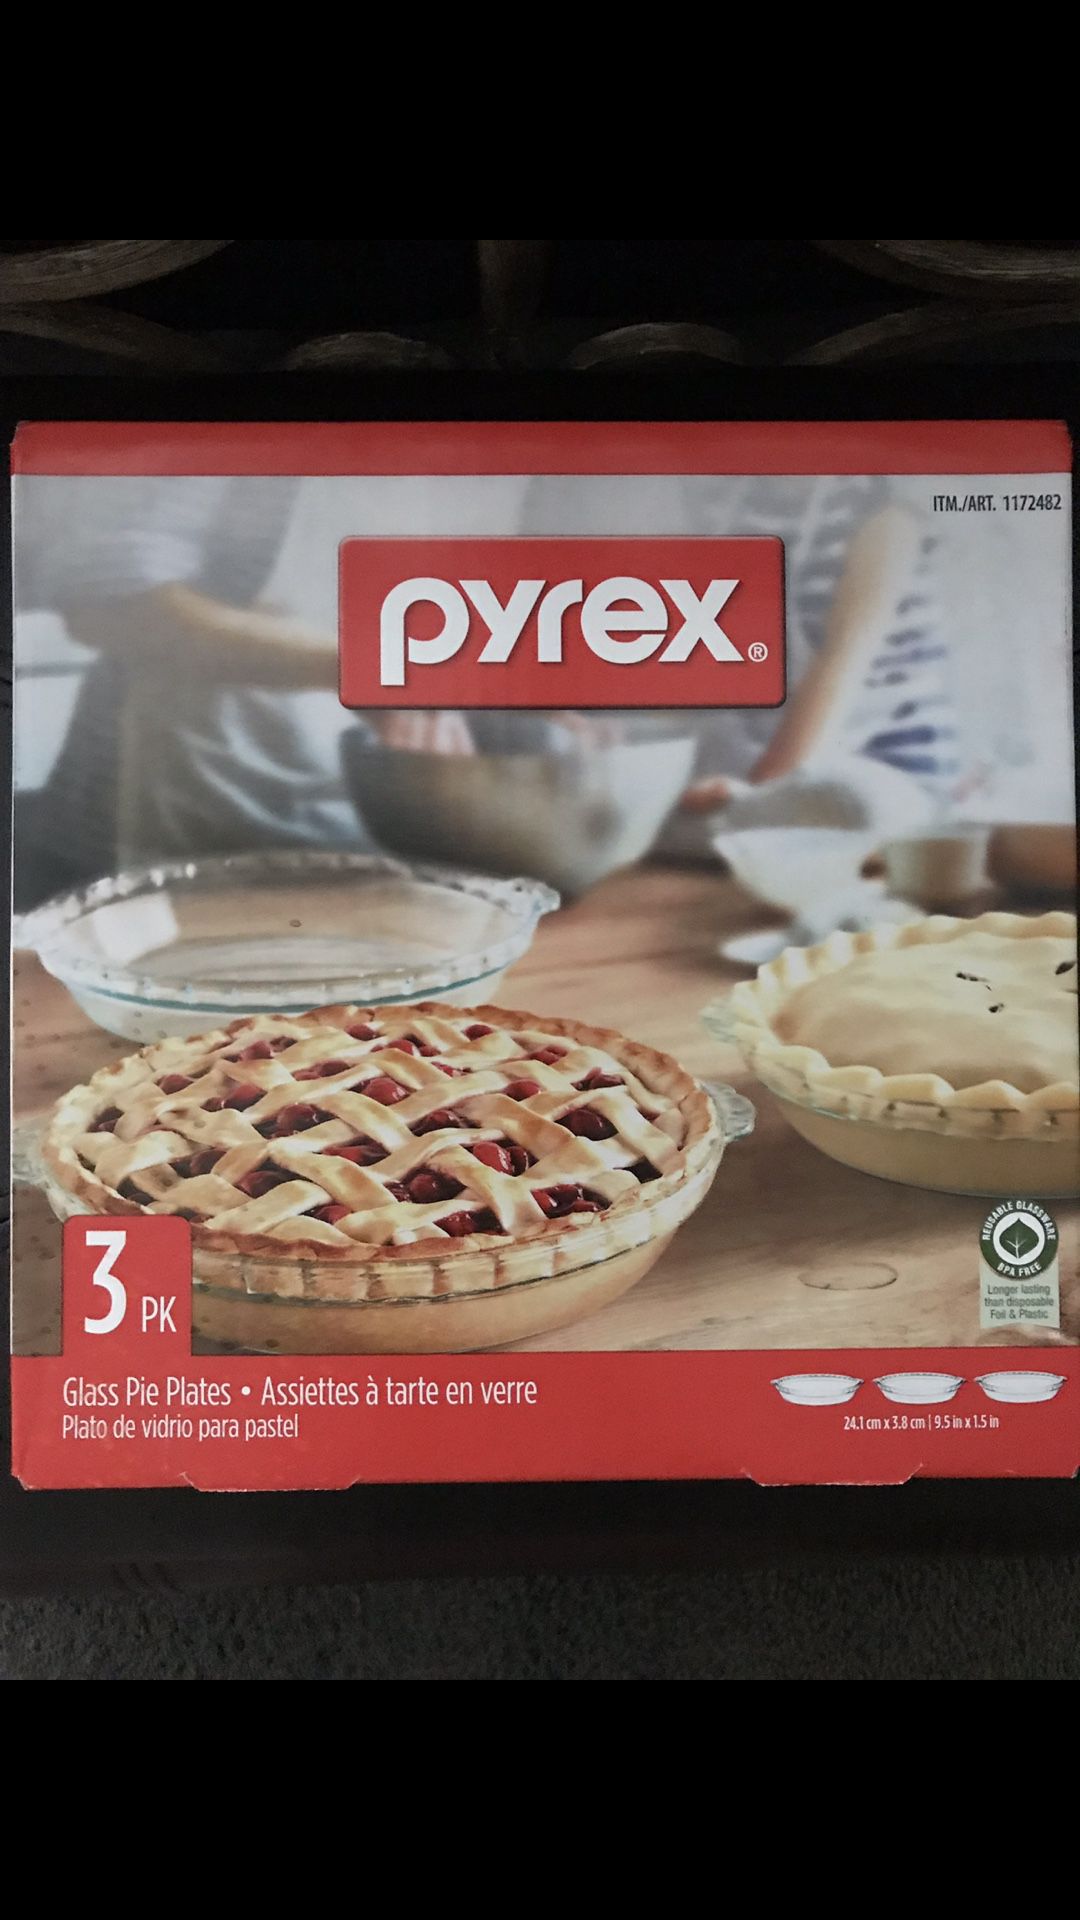 Pyrex Glass Pie Plates